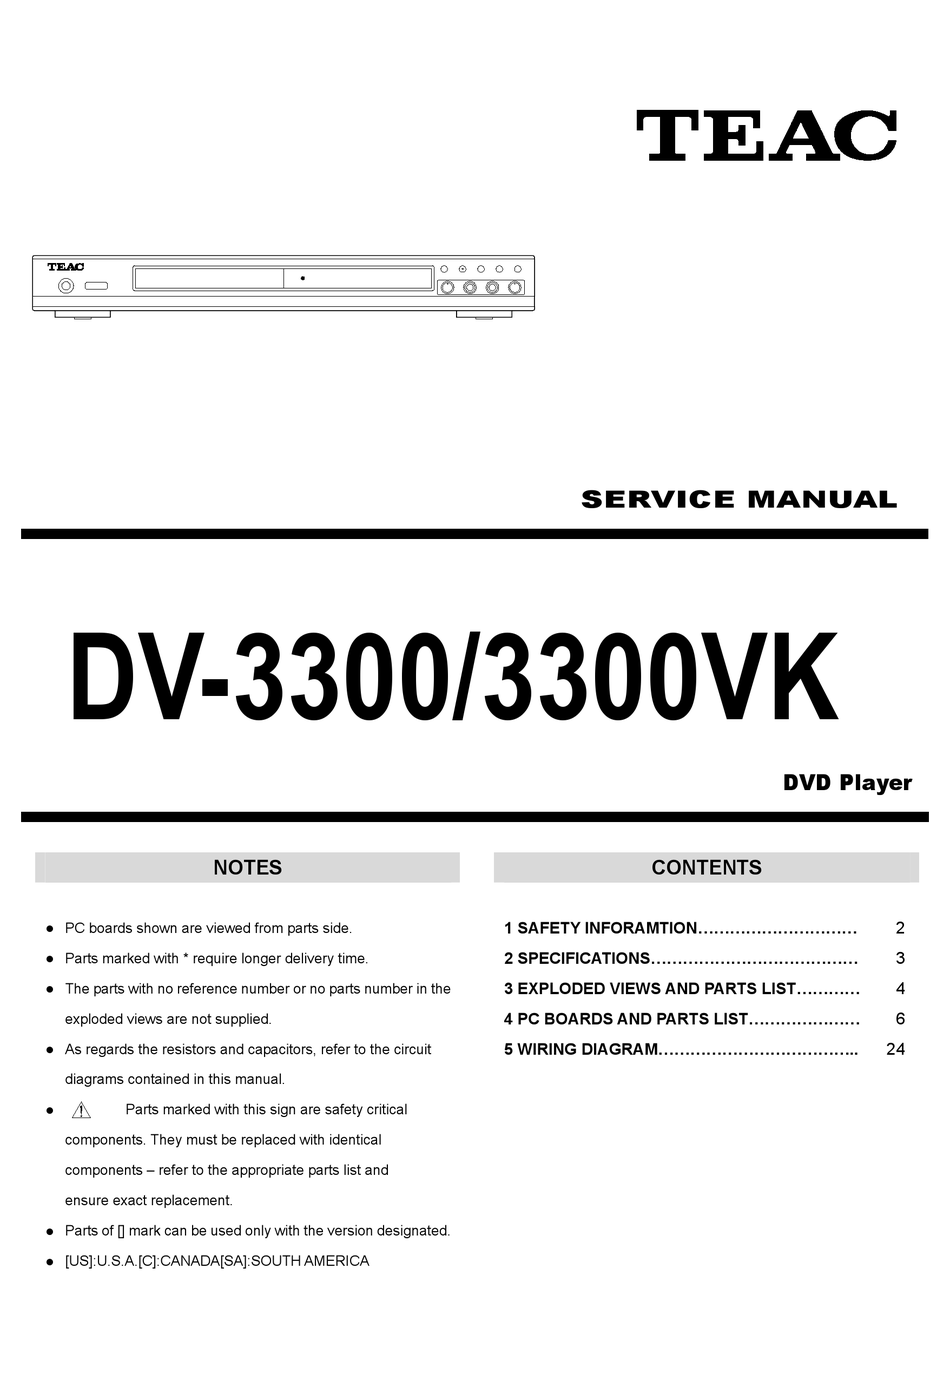 TEAC DV-3300 SERVICE MANUAL Pdf Download | ManualsLib